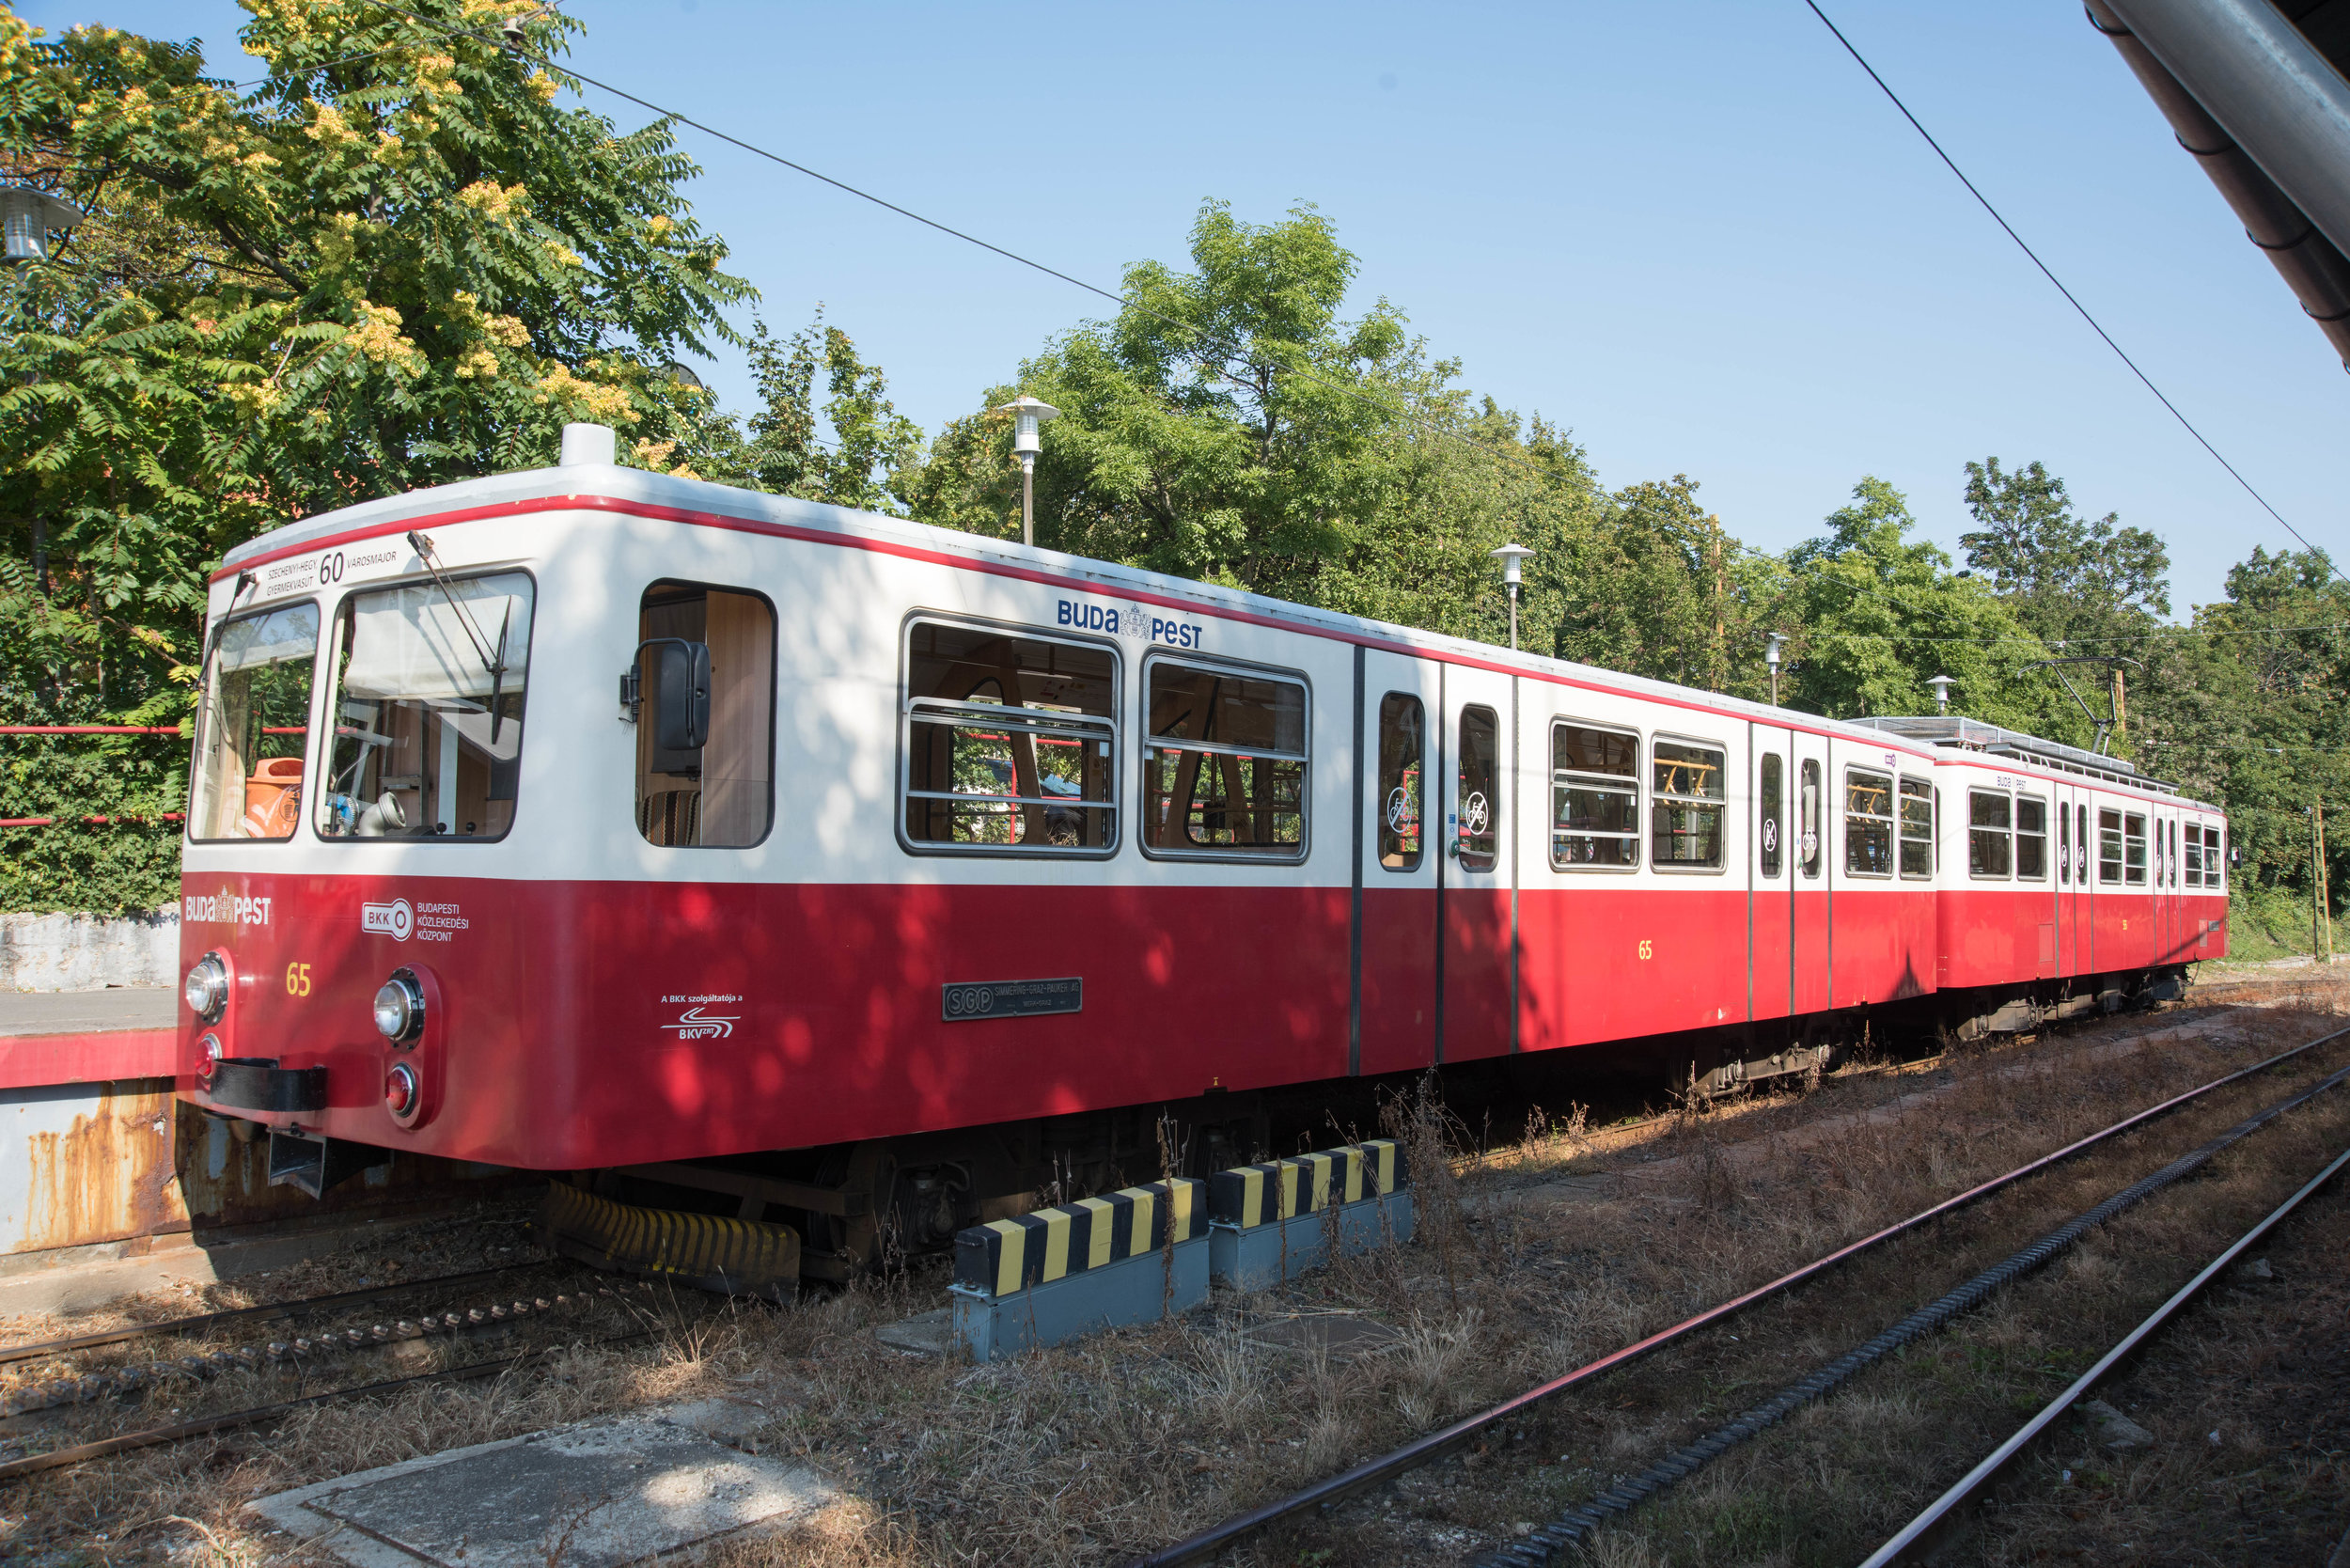 Cog Railway train, Buda Hills, Budapest, Hungary